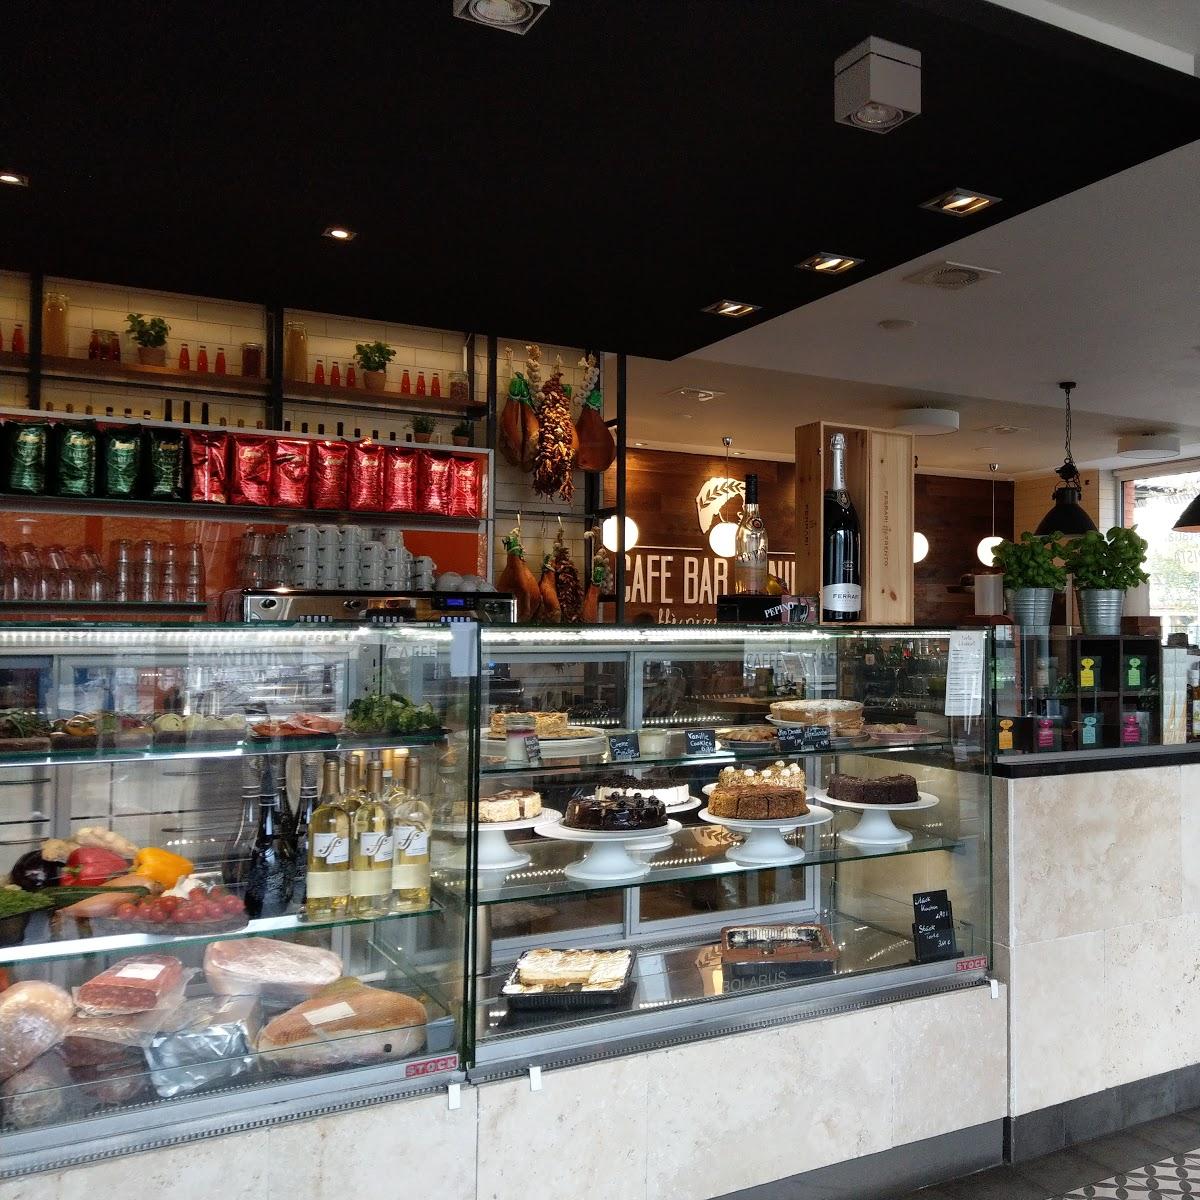 Restaurant "Cafe Bar Vanino" in Hannover